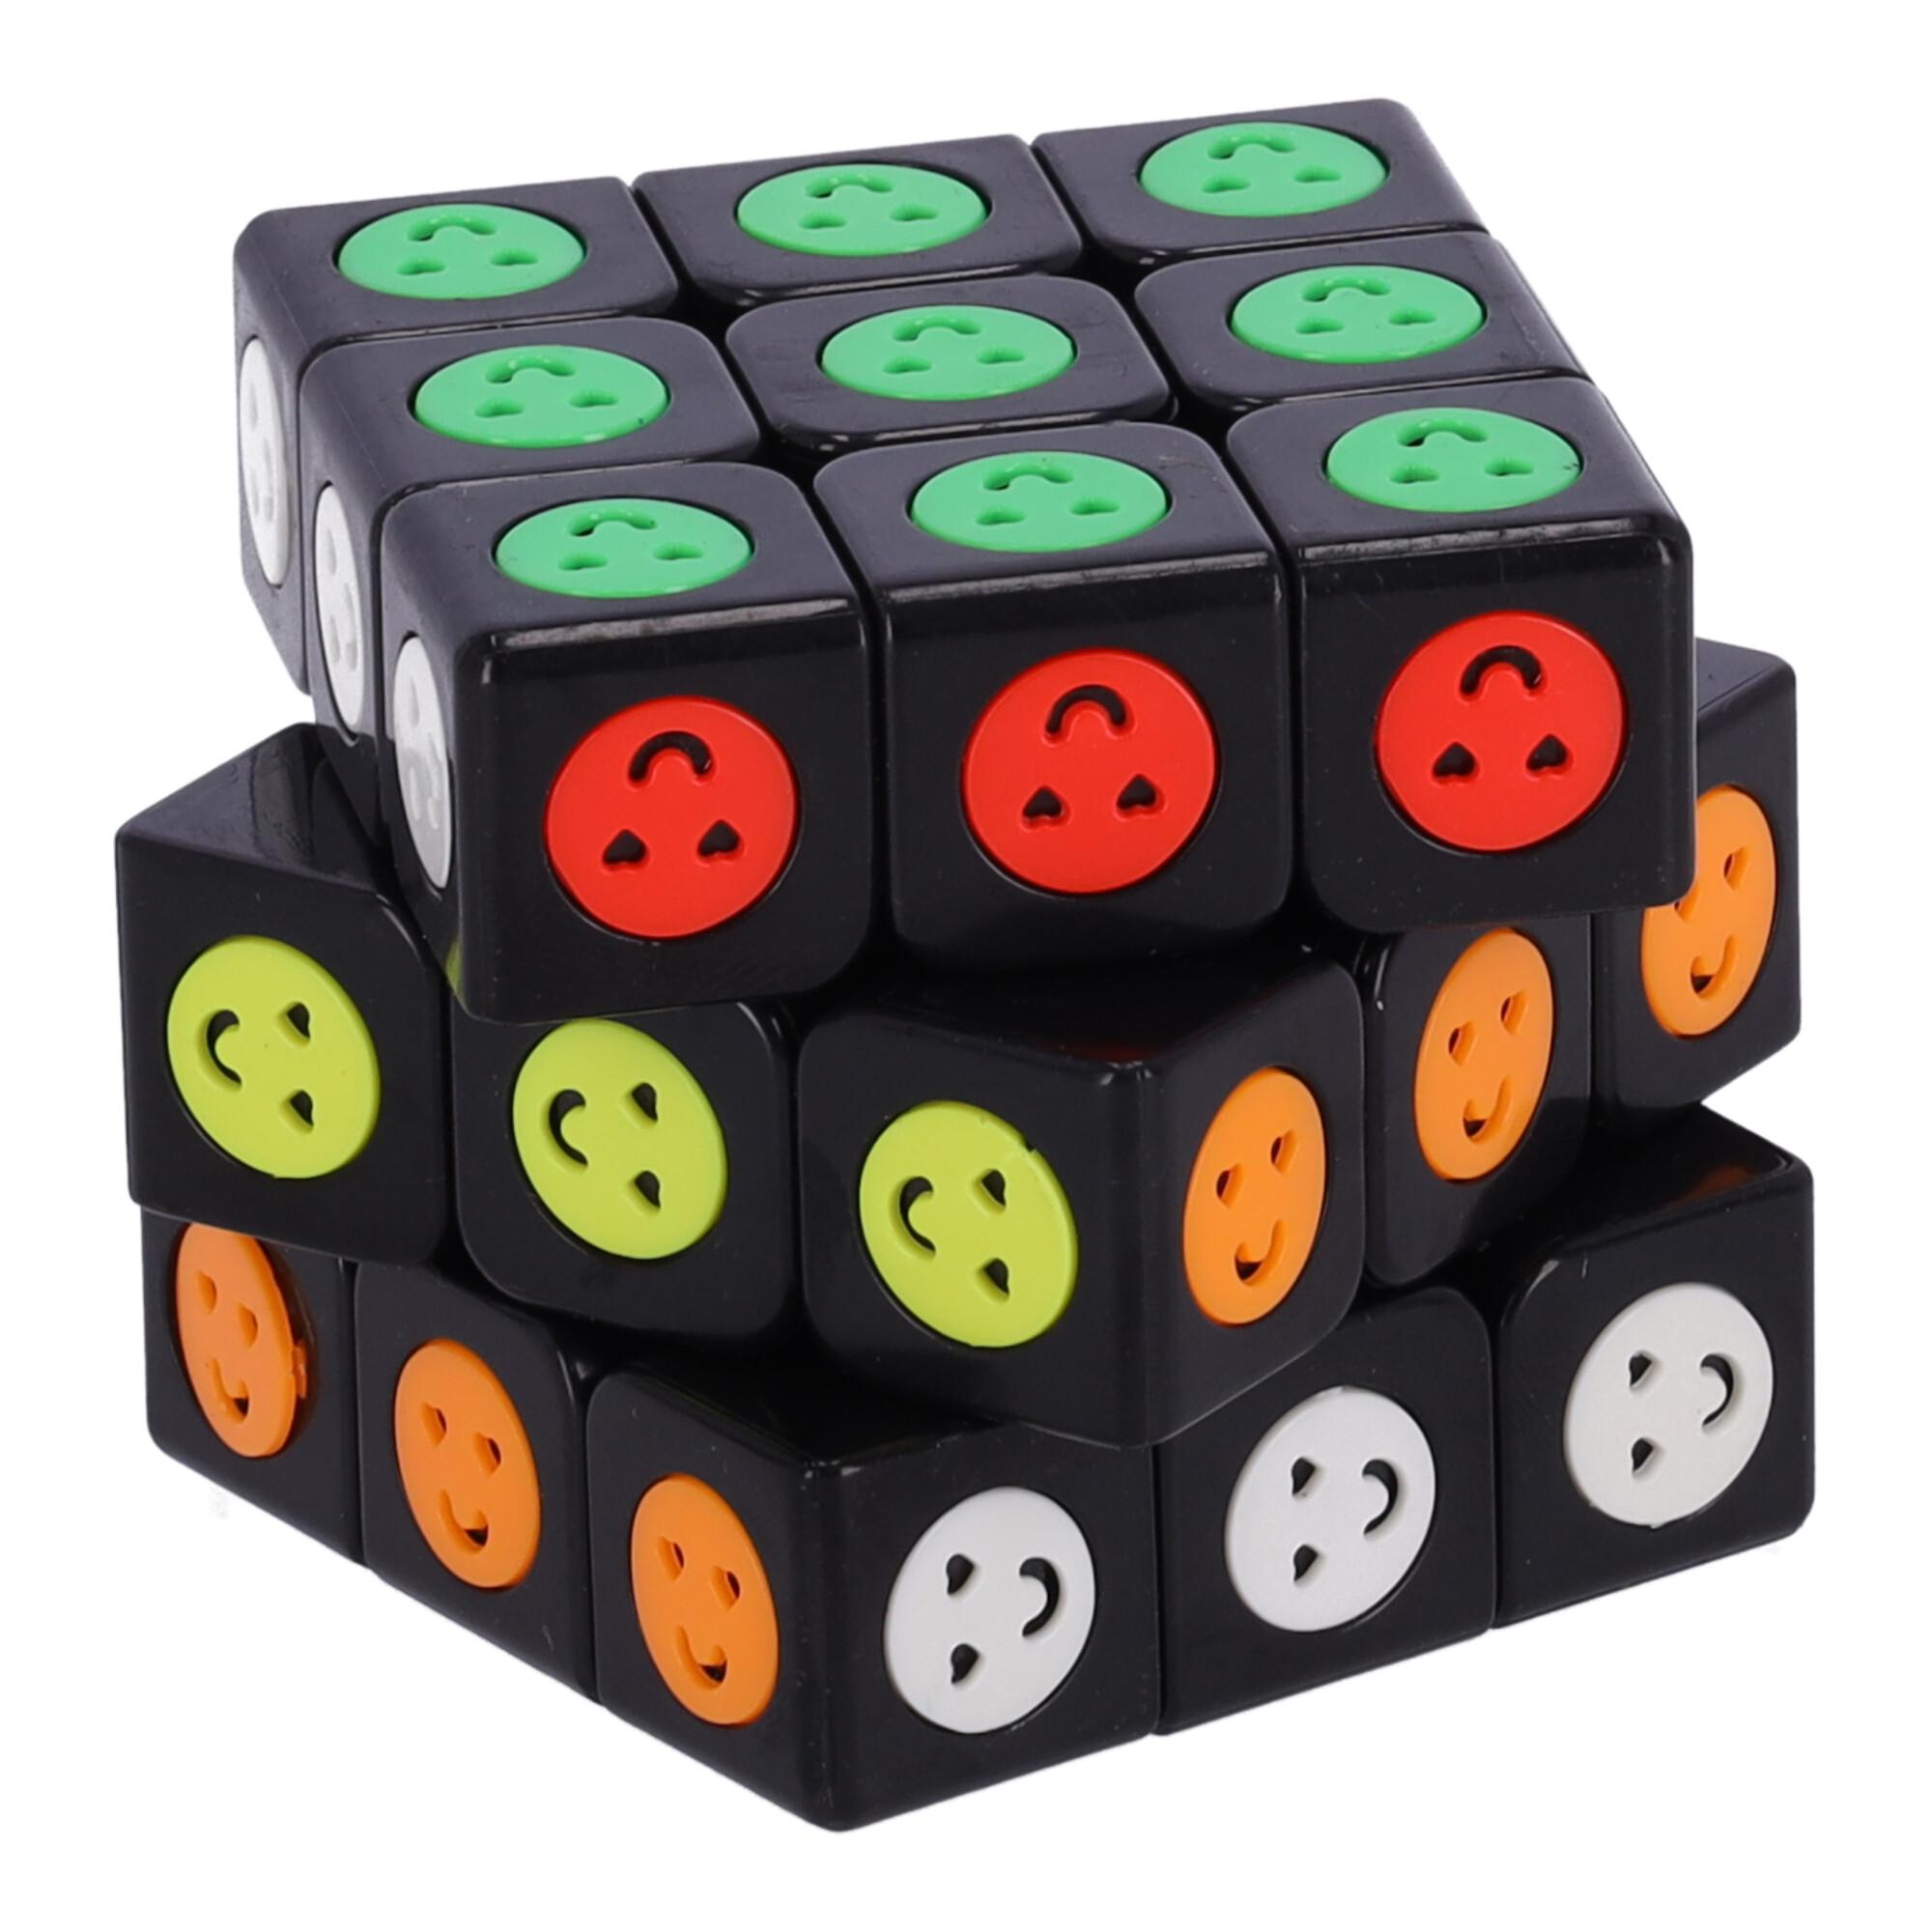 Modern jigsaw puzzle, Rubik's Cube puzzle - type III